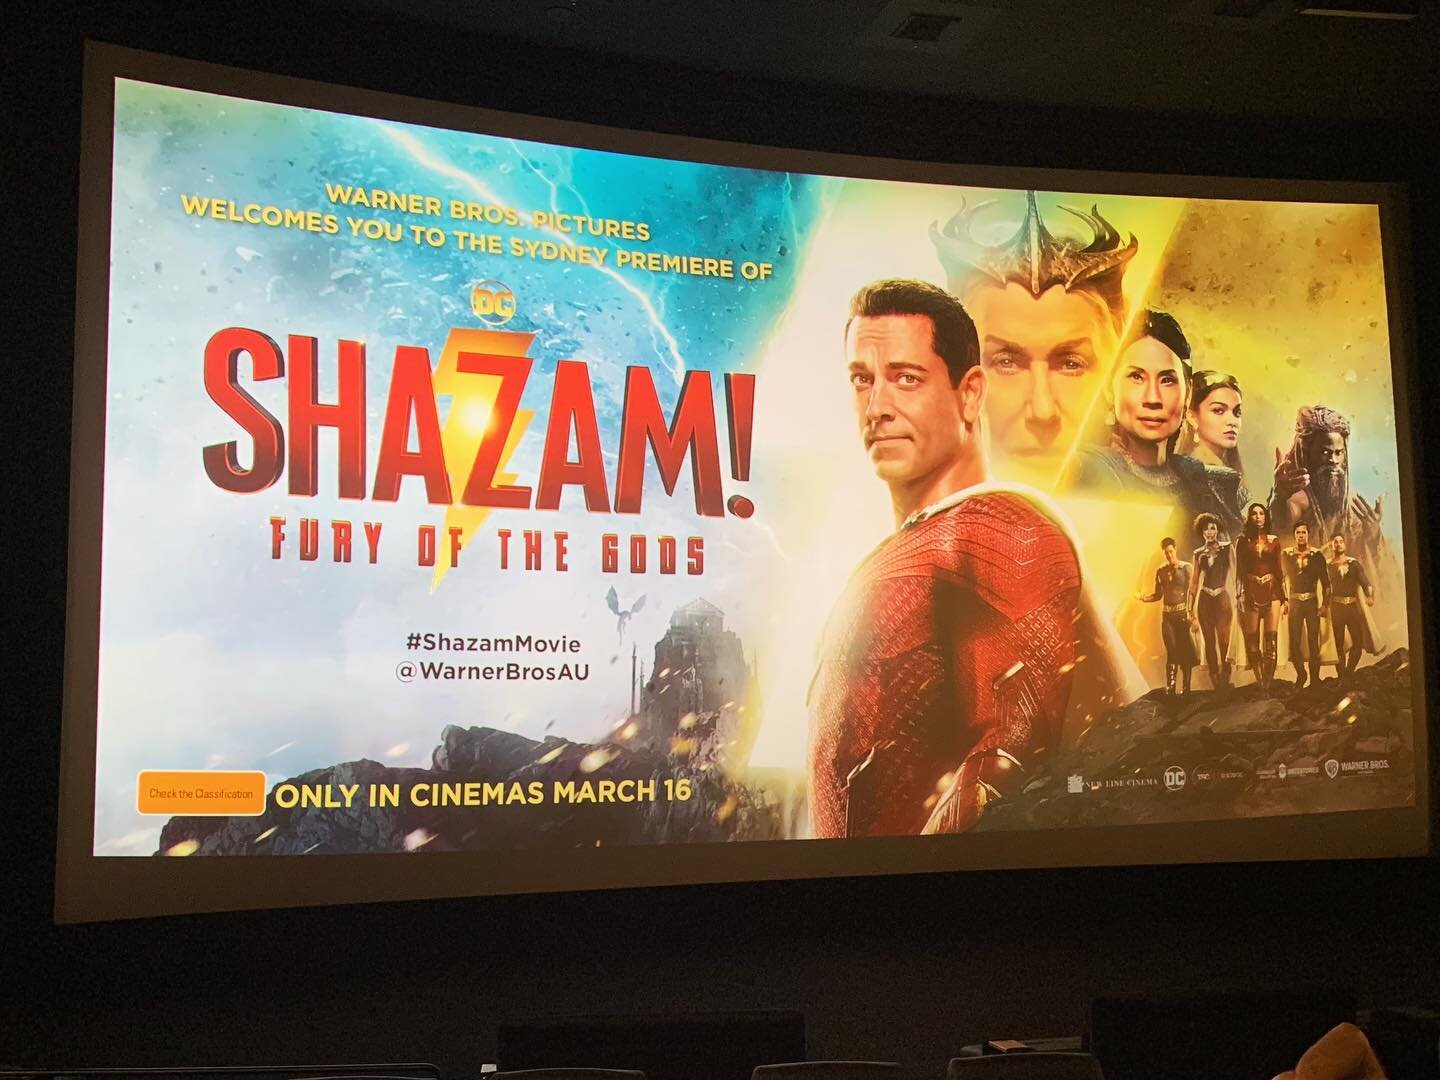 You know you want to see it! #shazam is back! 
Thanks @universalpicsau and @warnerbrosau for the screening. 
In cinemas on March 16. 
#newrelease #shazammovie #furyofthegods #warnerbros #zacharylevi #helenmirren #superheroes #dc #dccomics #dcmovies #